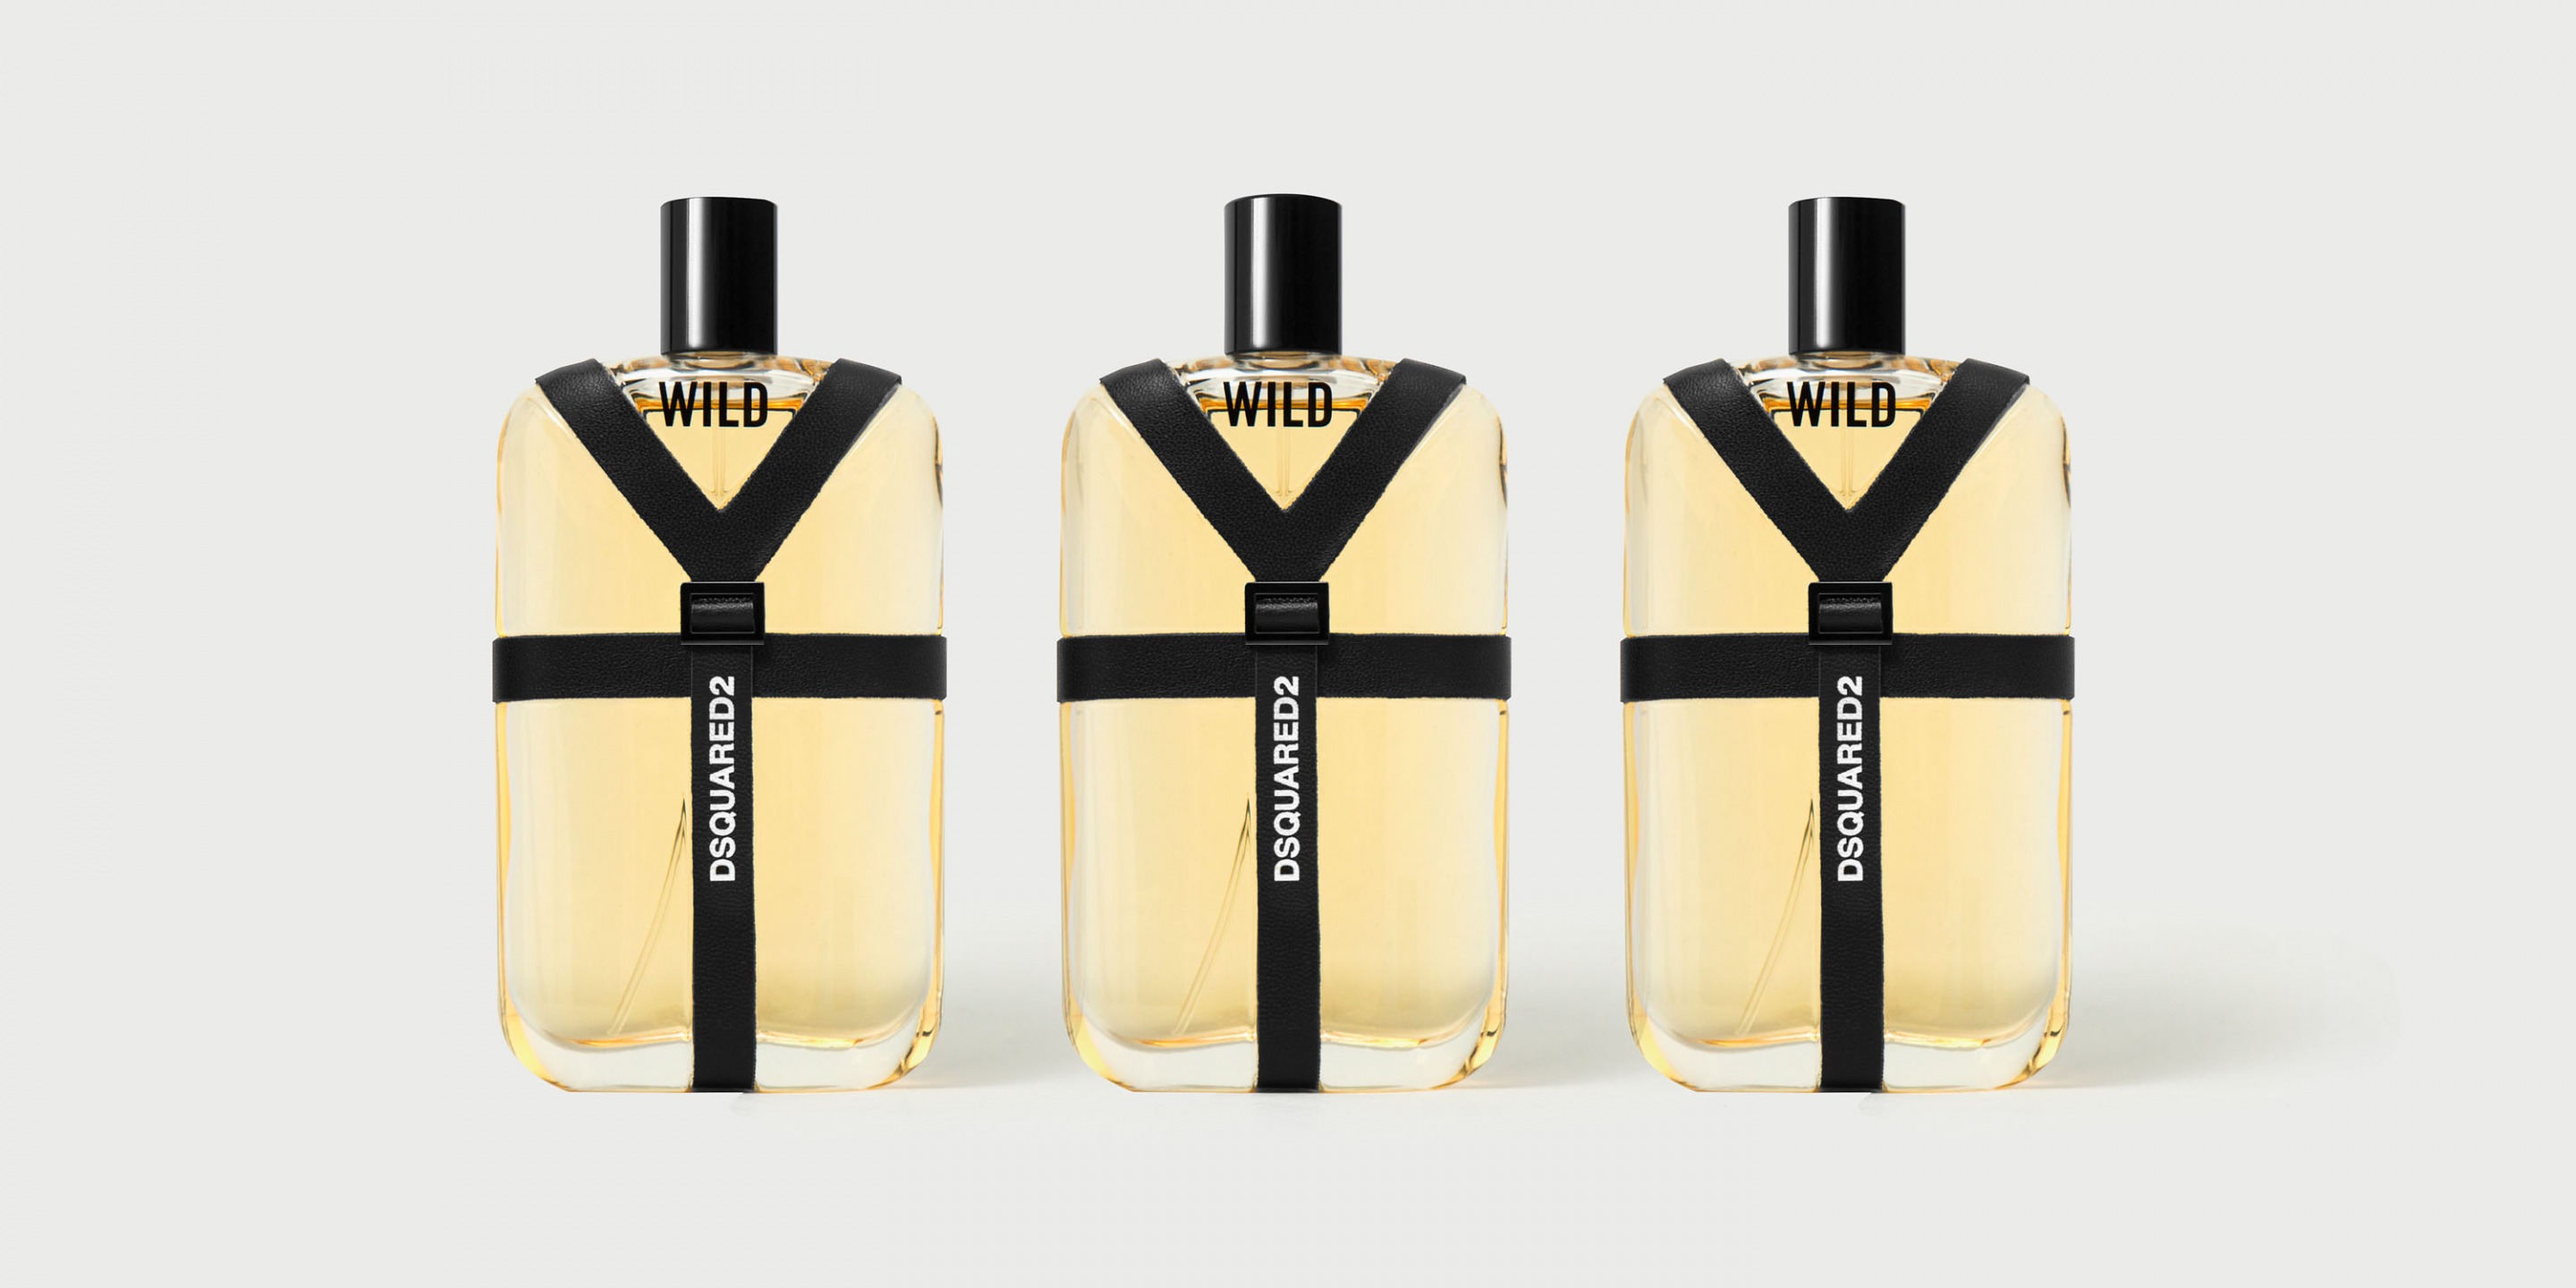 dsquared2 wild perfume